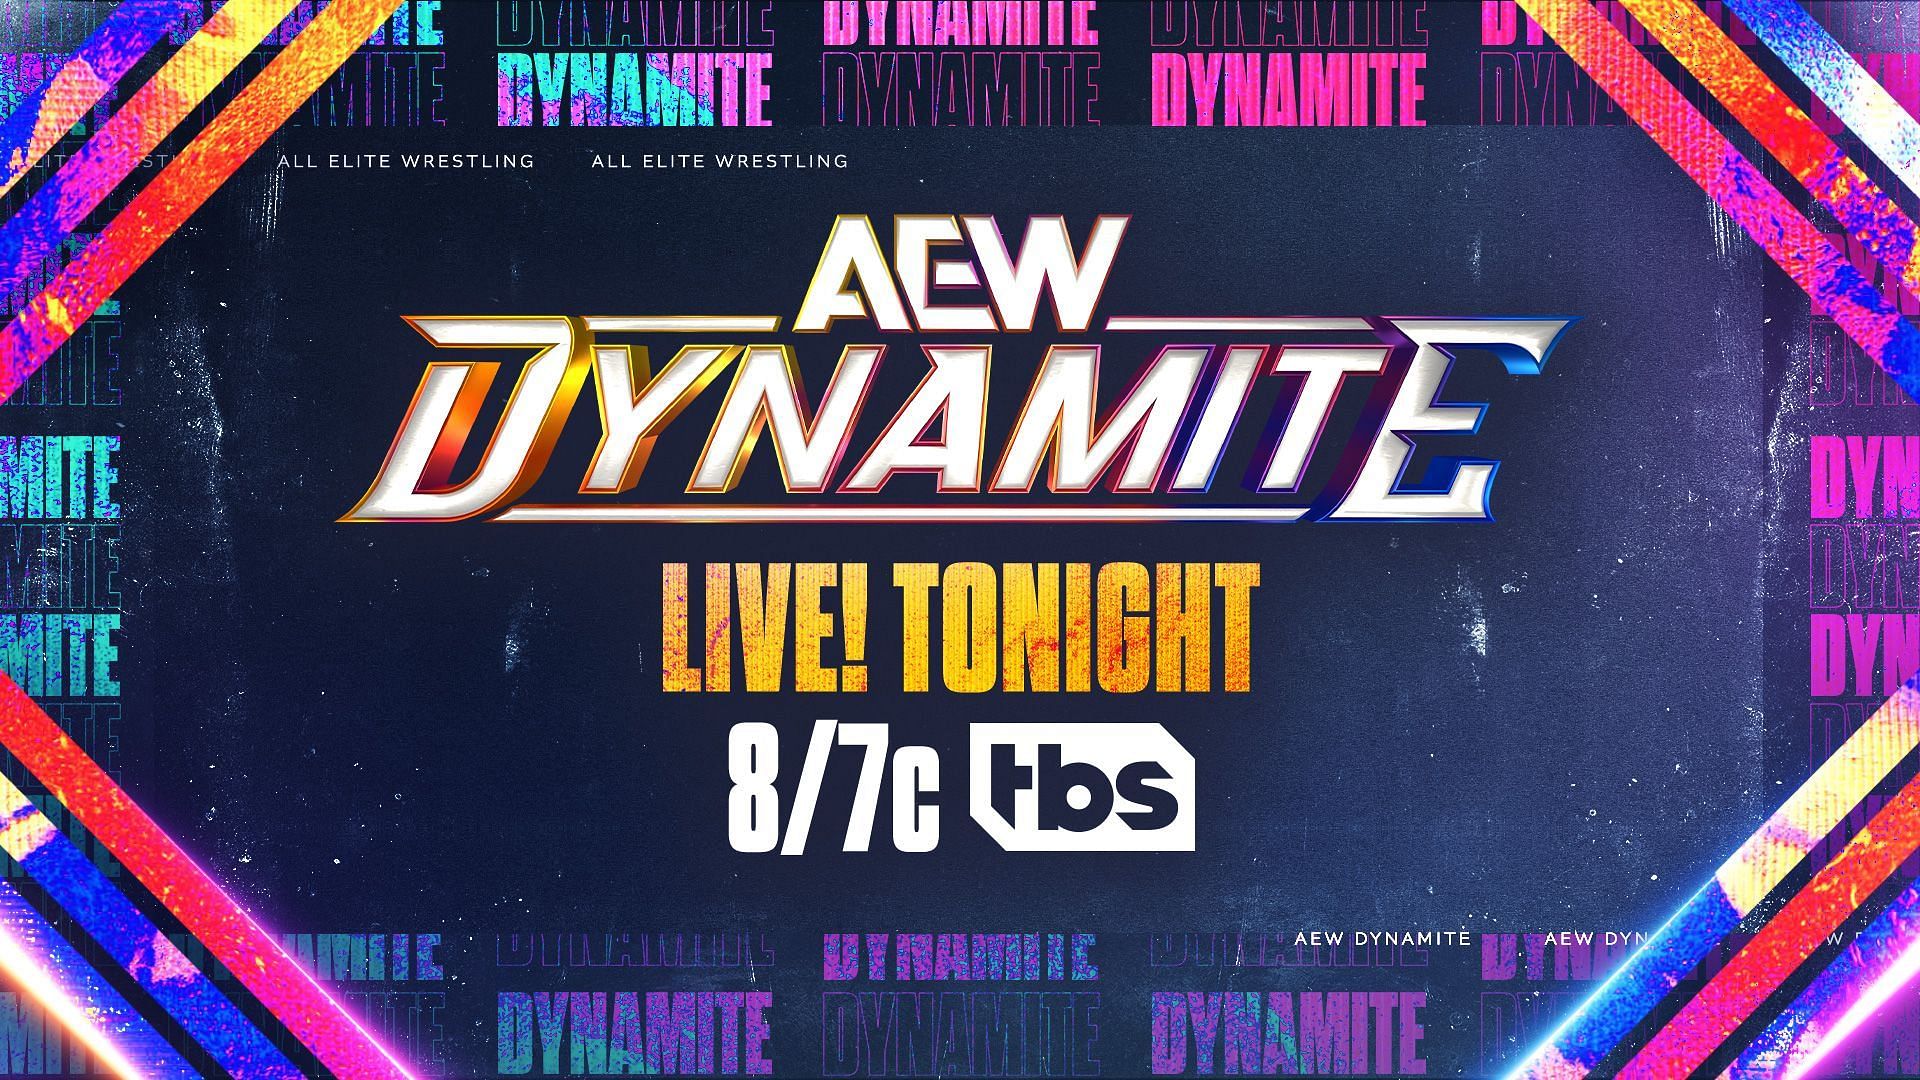 The new logo of AEW Dynamite (Image credits: AEW